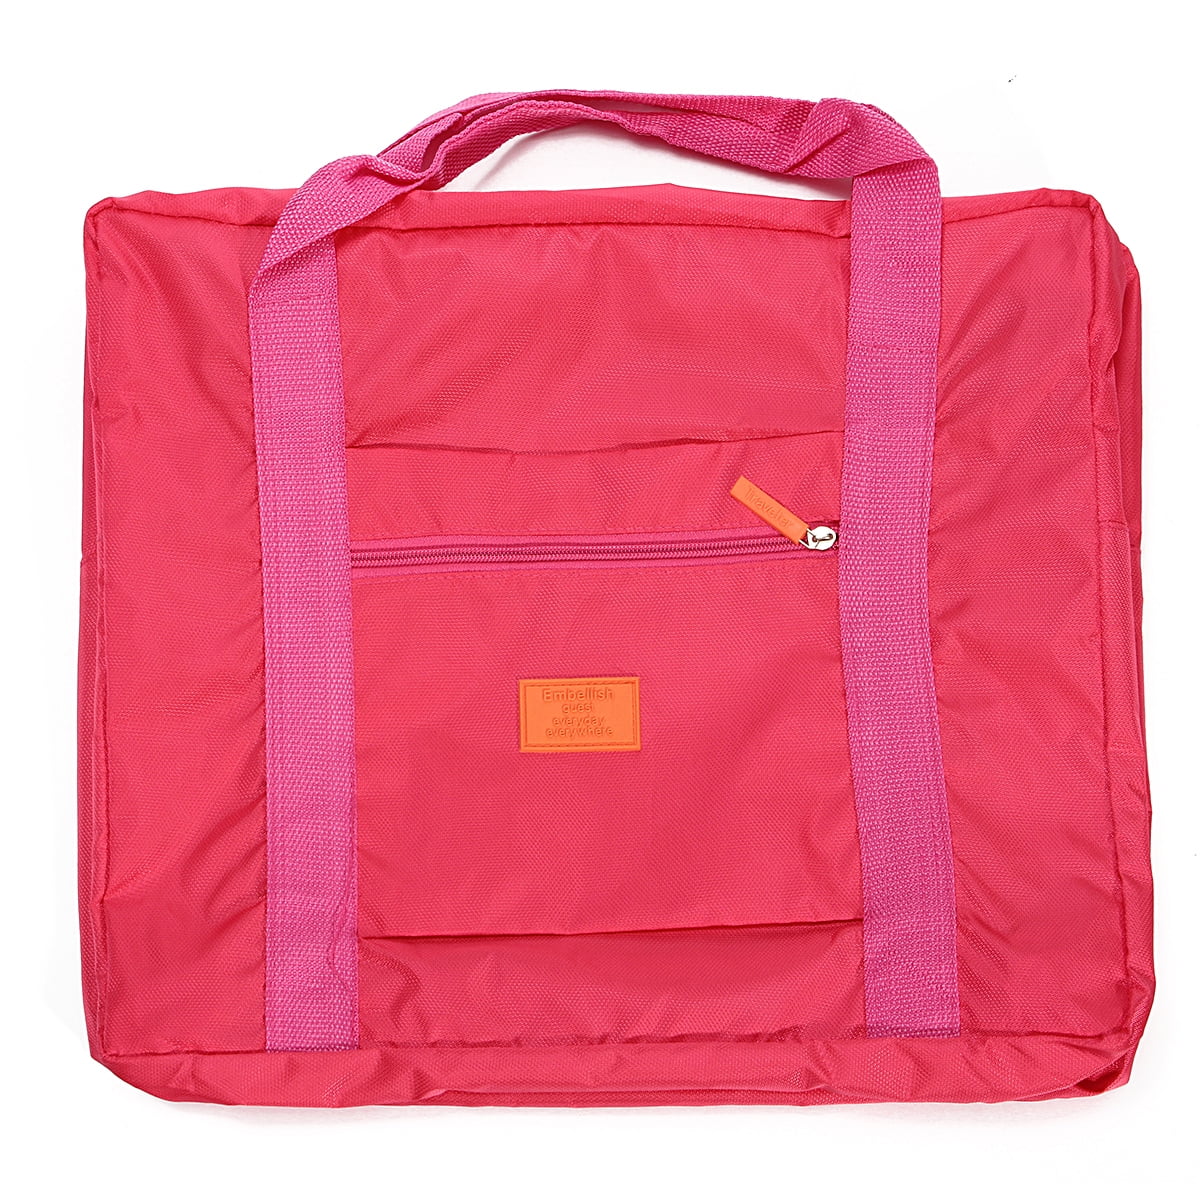 Black Foldable Large Capacity Travel Deffel Bag Unisex Fashion Portable Travel Bag Travel Carry on Luggage Bag for Man Women 